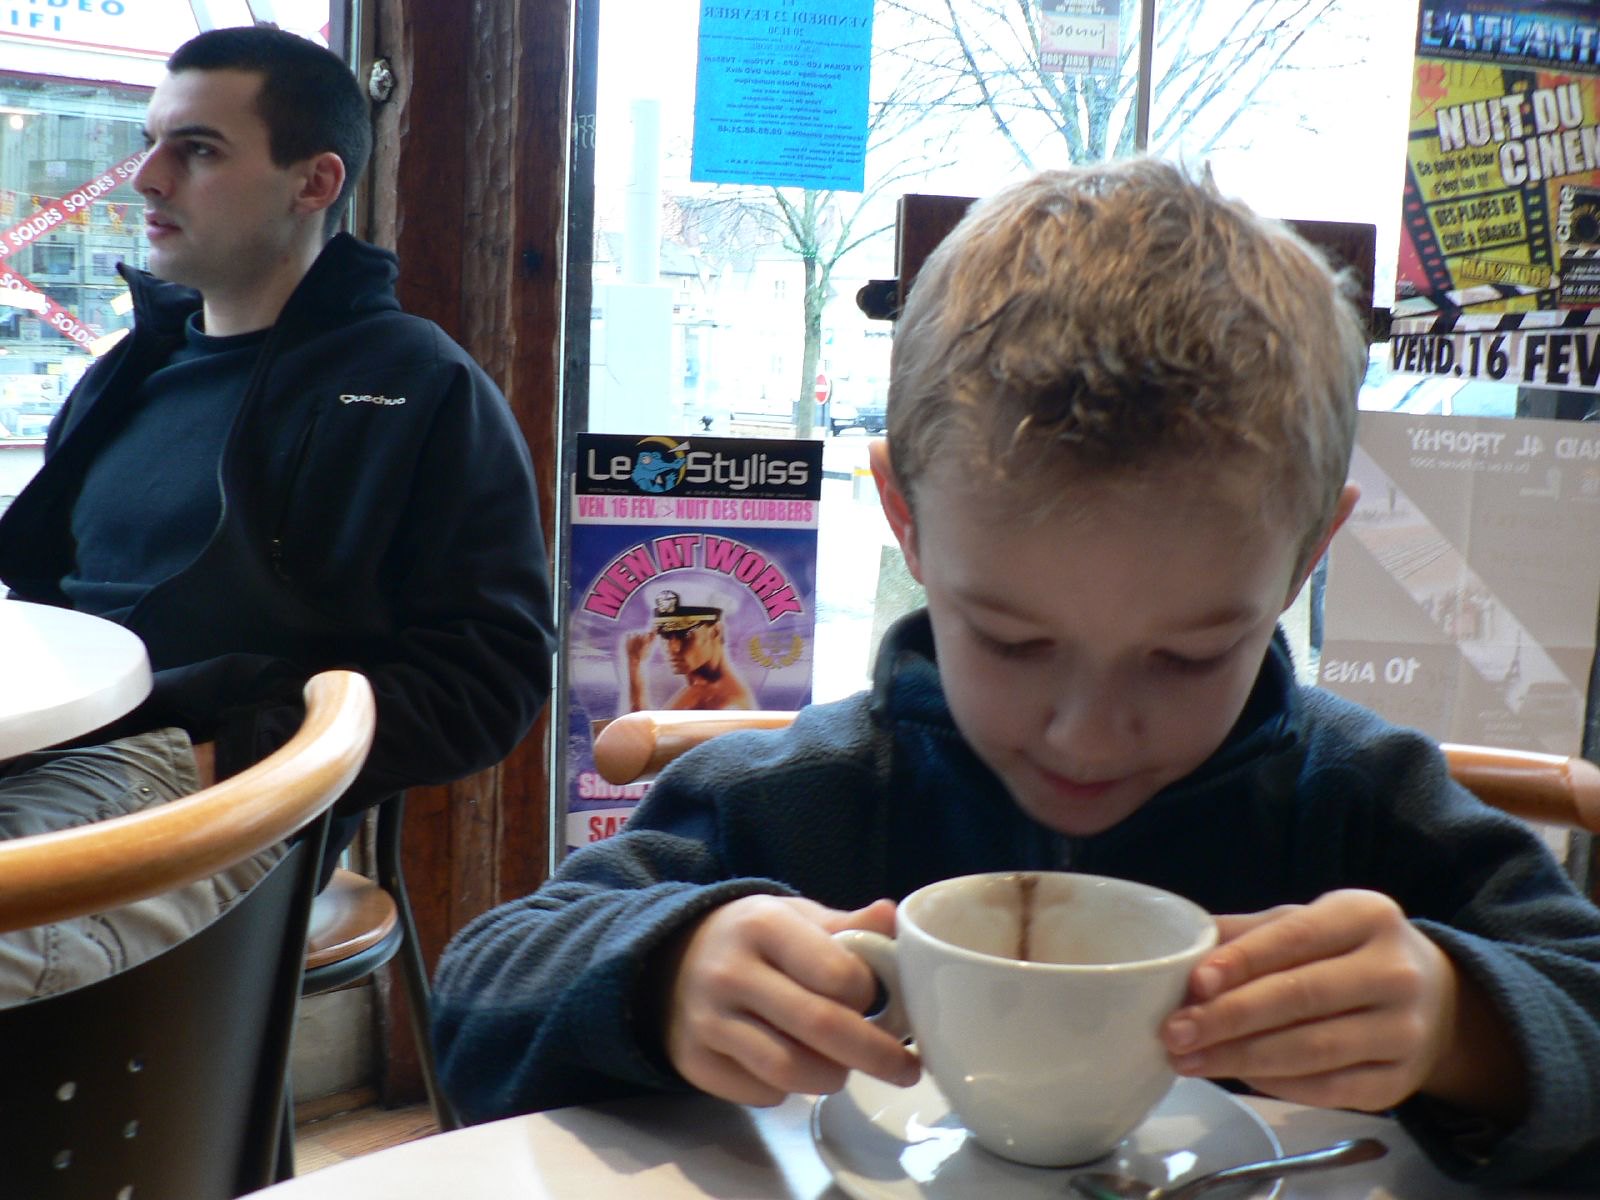 A little boy having coffee in a restaurant | Source: Flickr